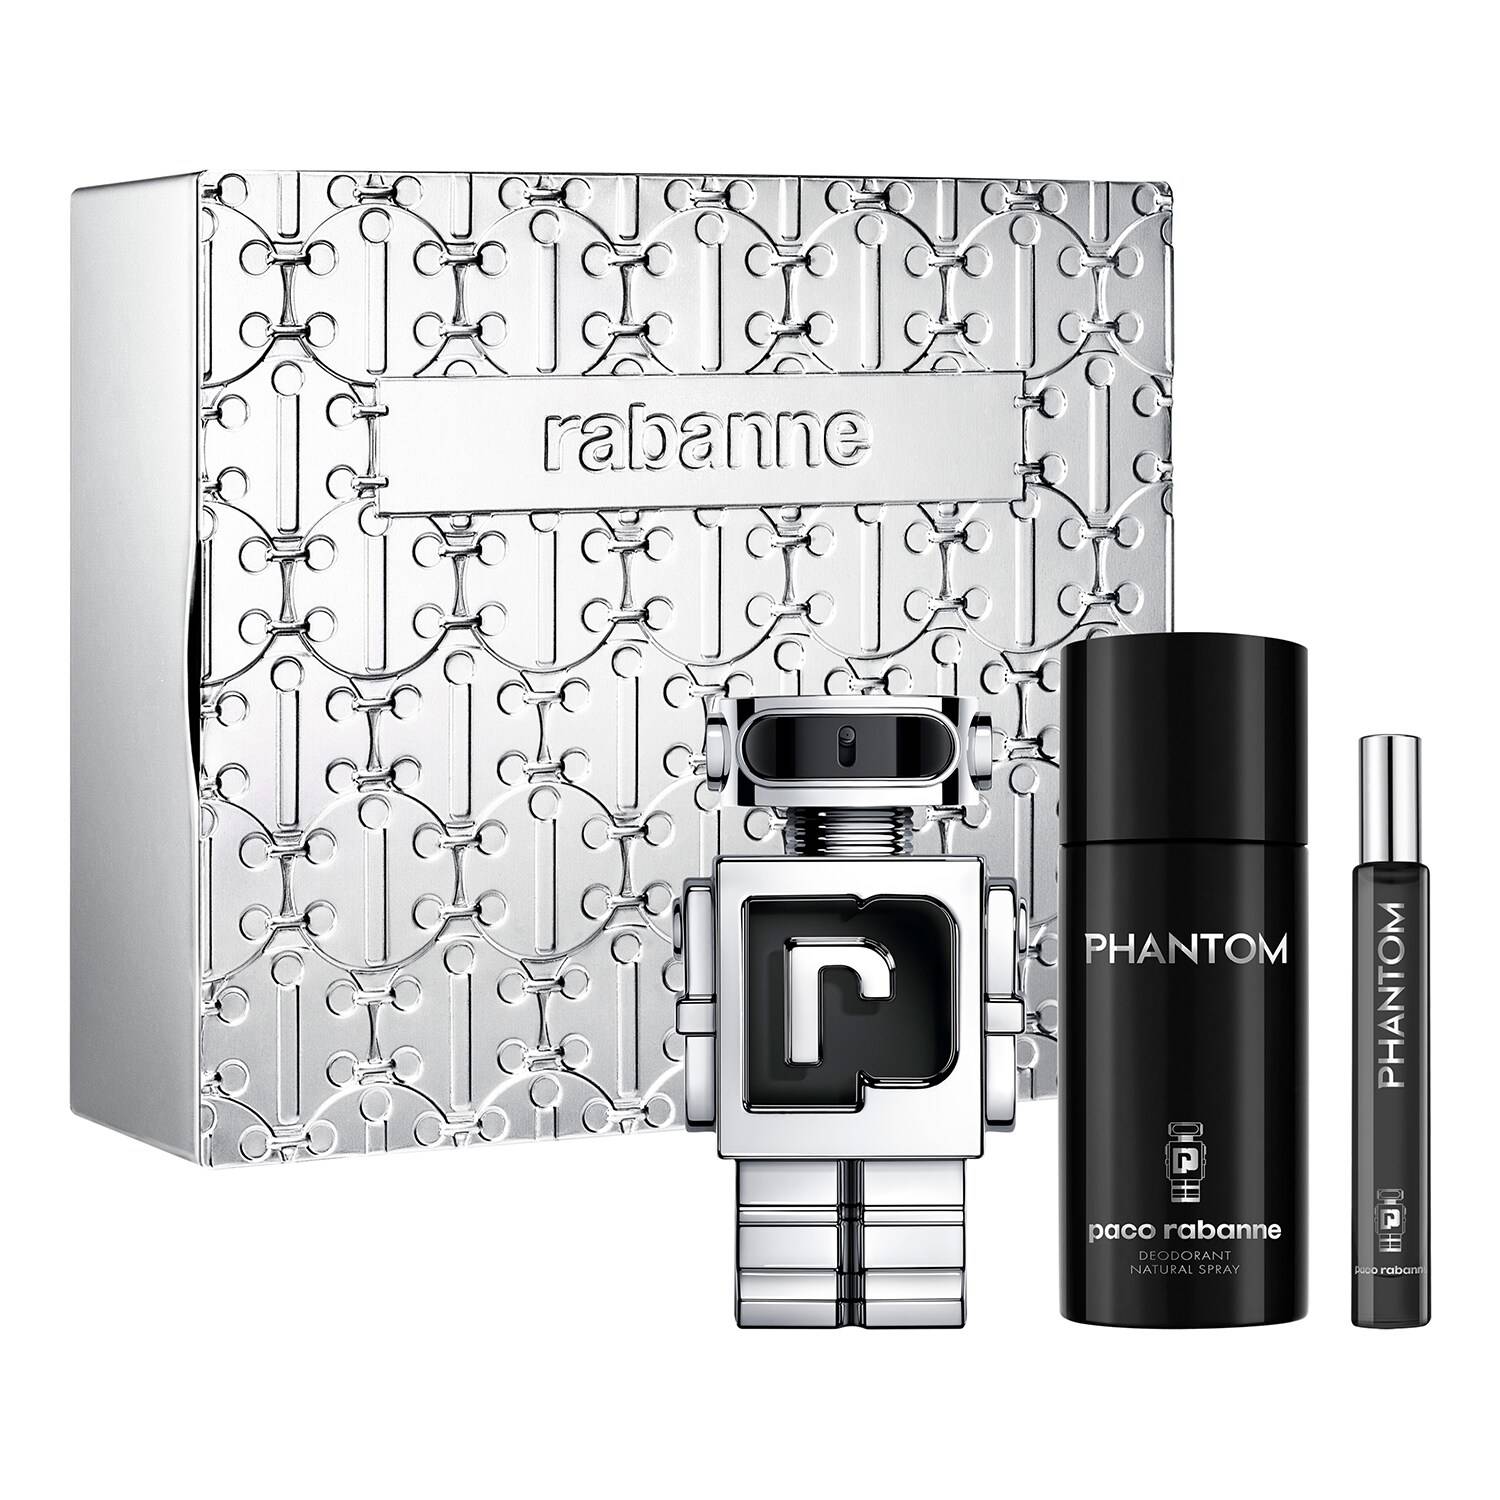 Rabanne Fragrances Phantom Eau De Toilette Fragrance Gift Set